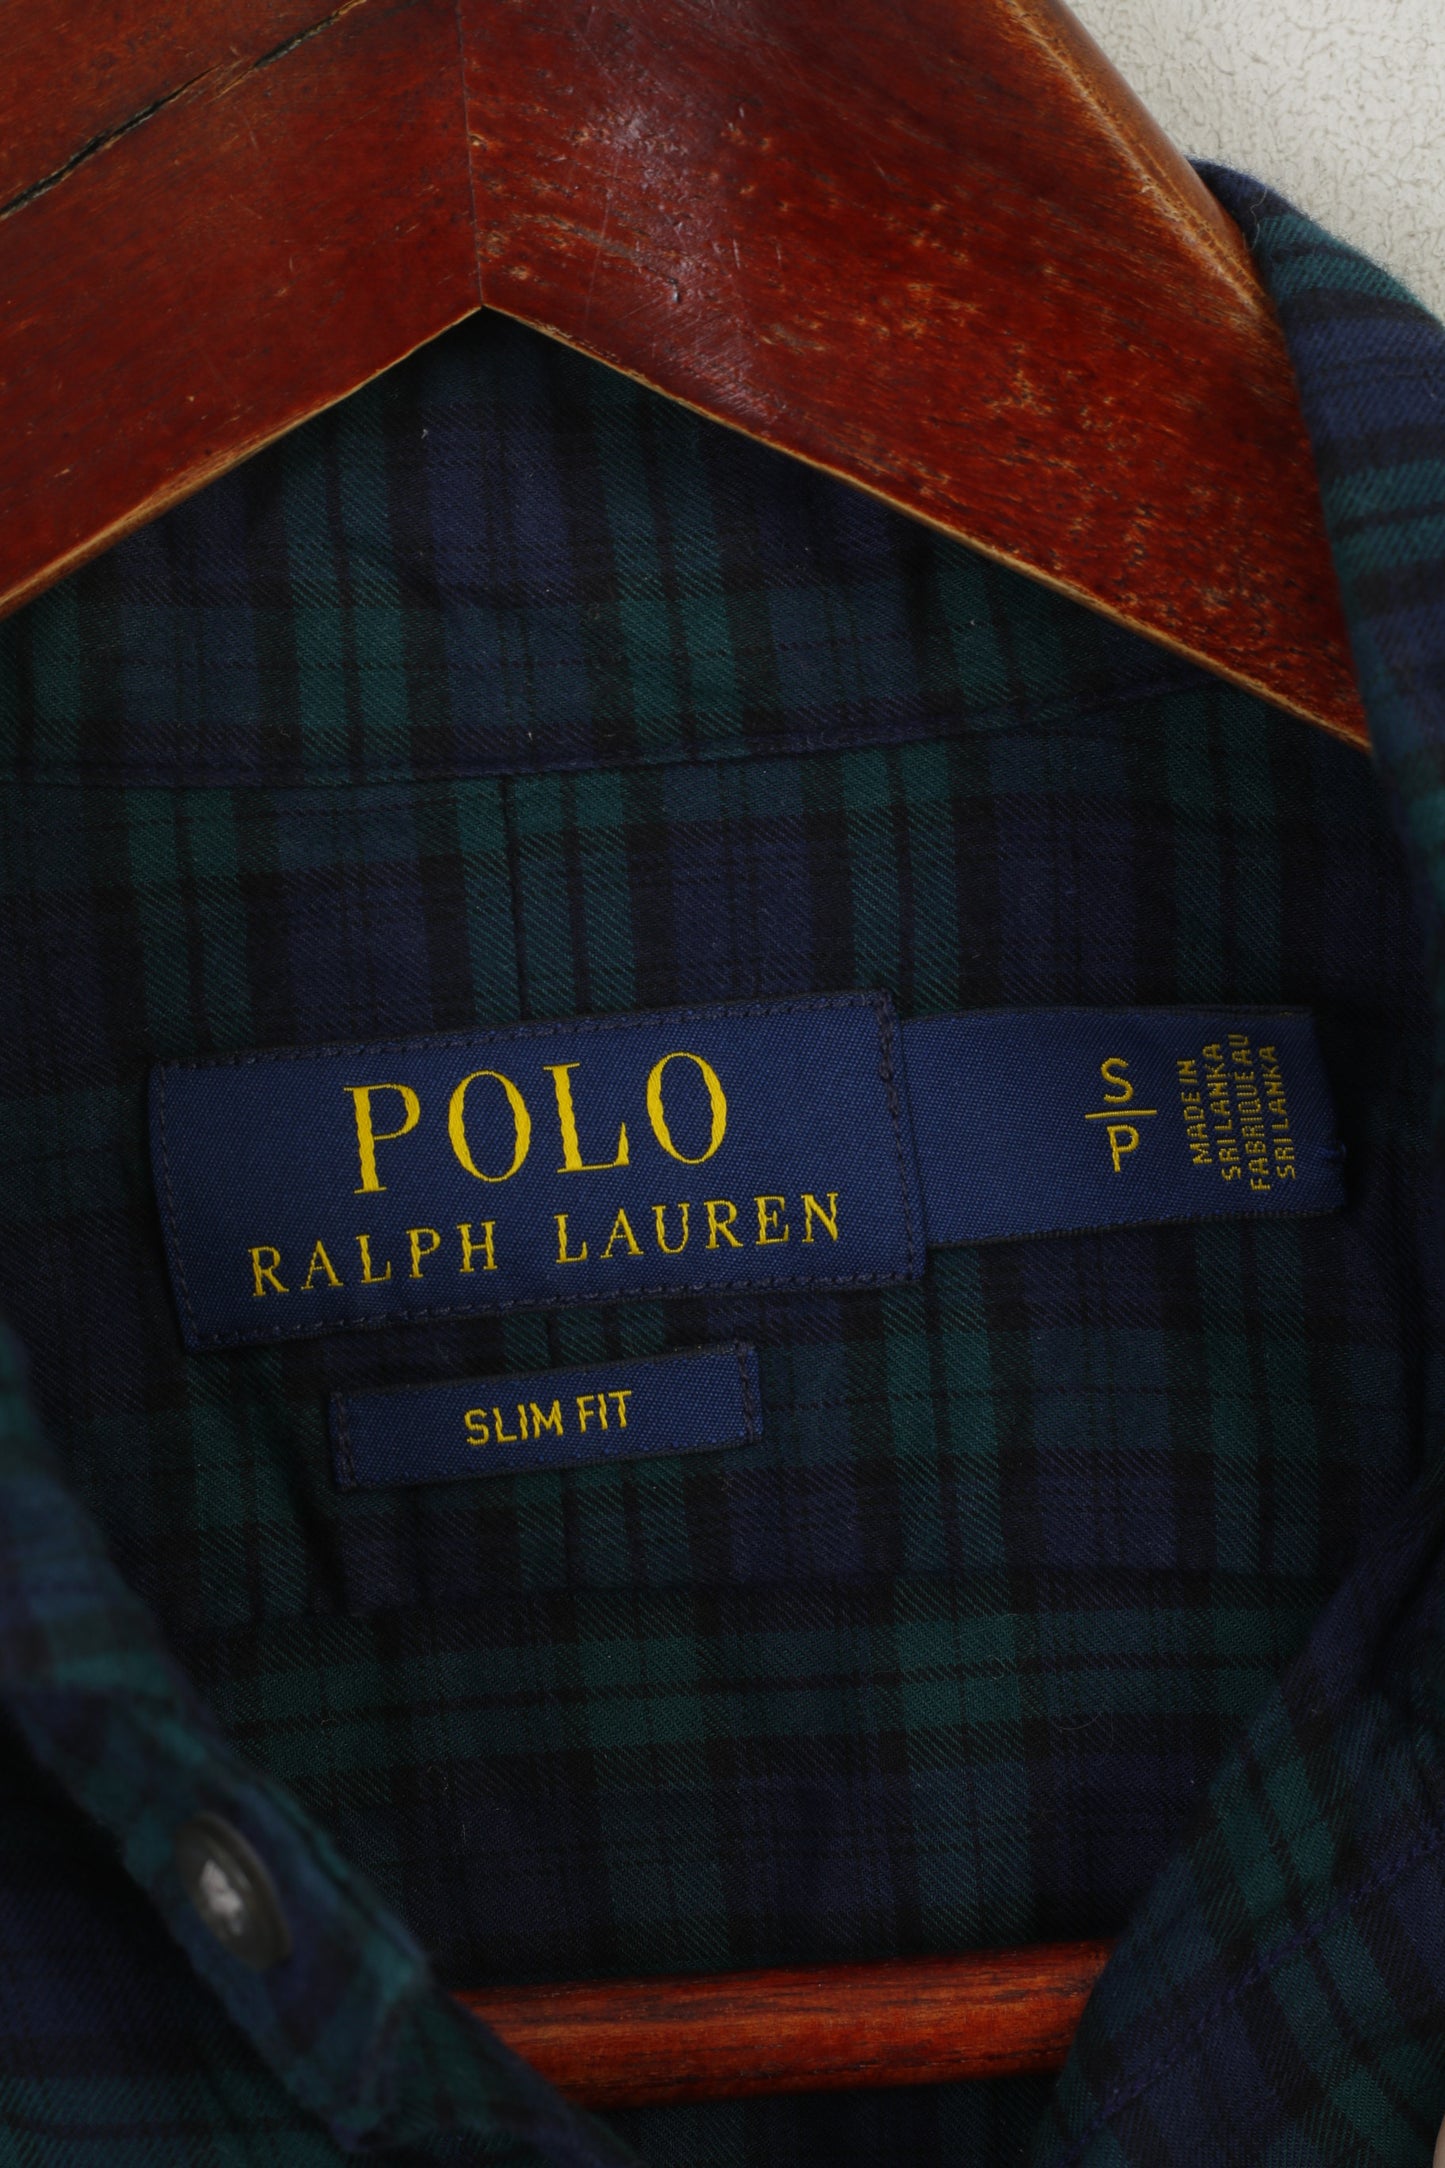 Polo Ralph Lauren Men S Casual Shirt Navy Cotton Check Slim Fit Long Sleeve Top